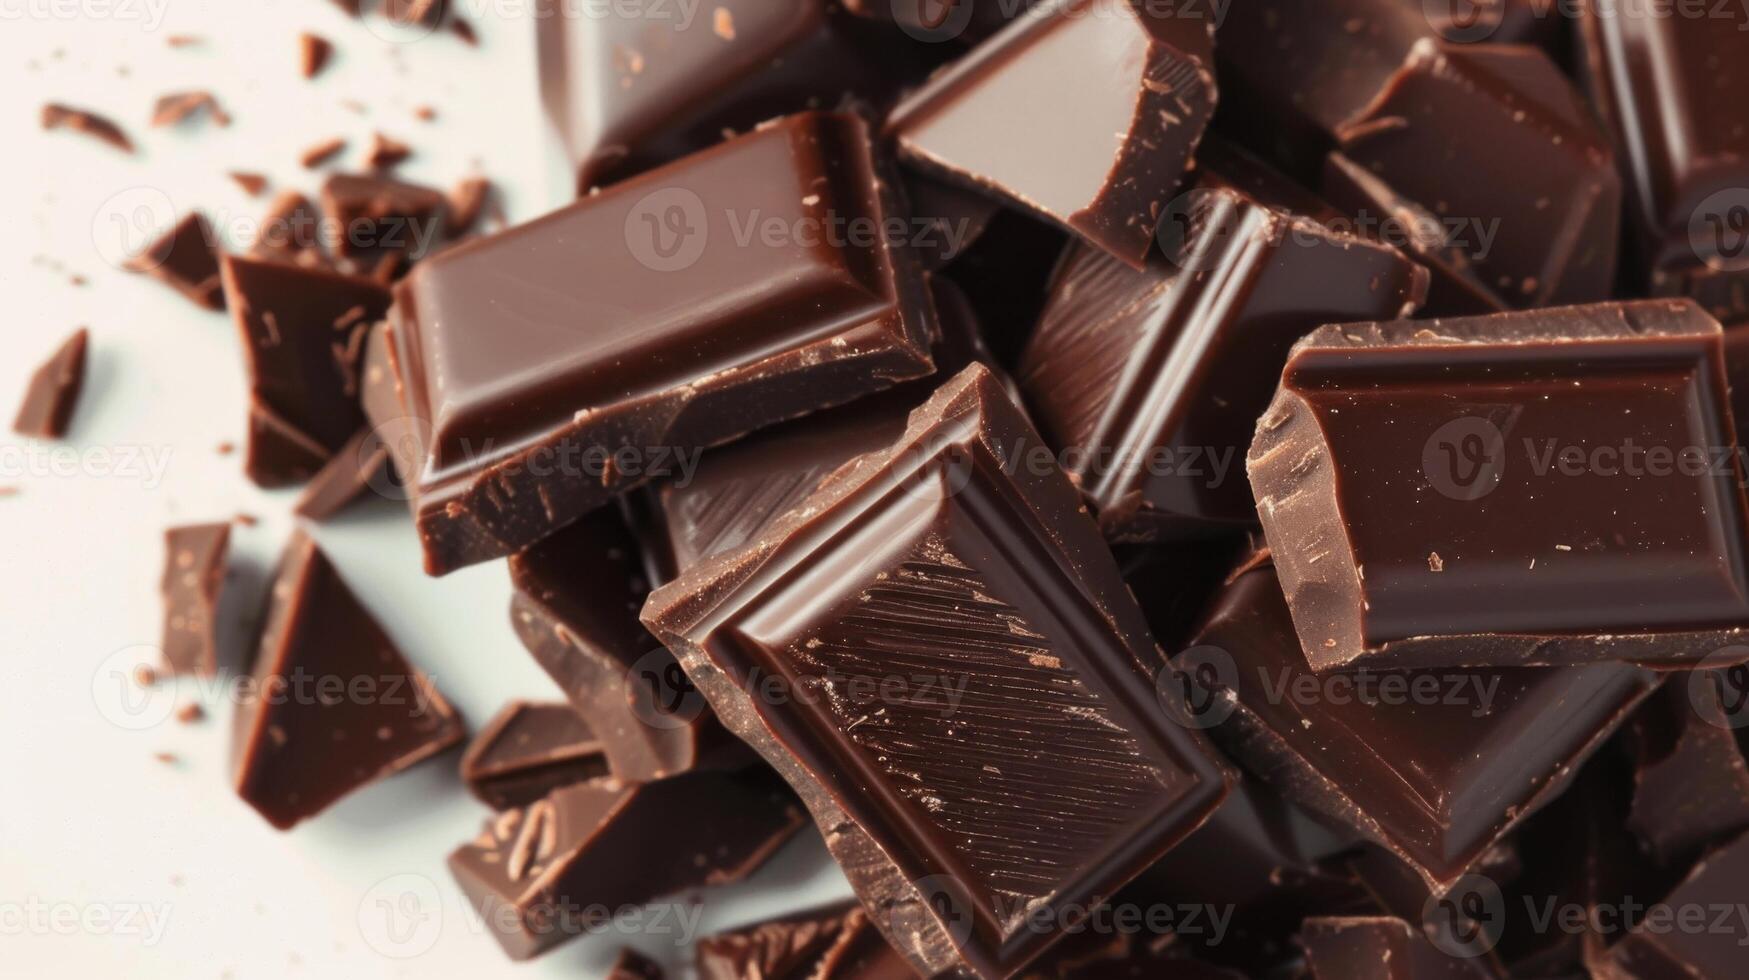 blandad mörk choklad bitar närbild isolerat i vit bakgrund foto